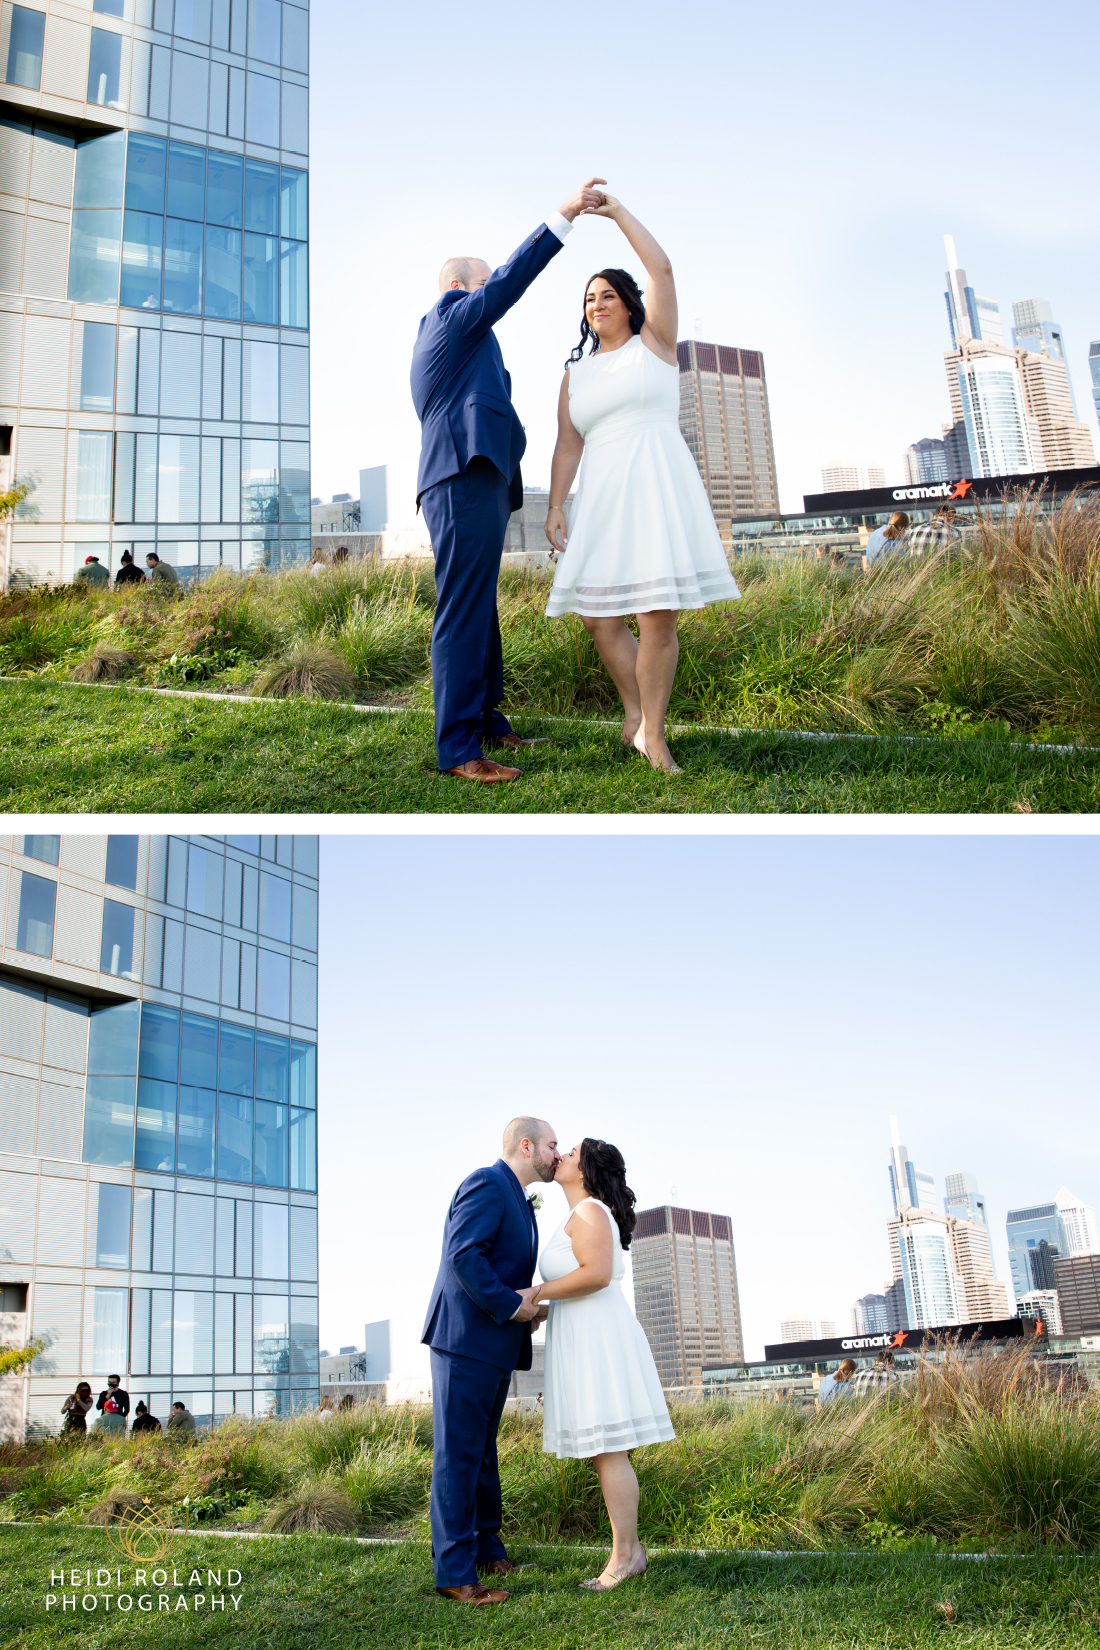 Rooftop City wedding photos